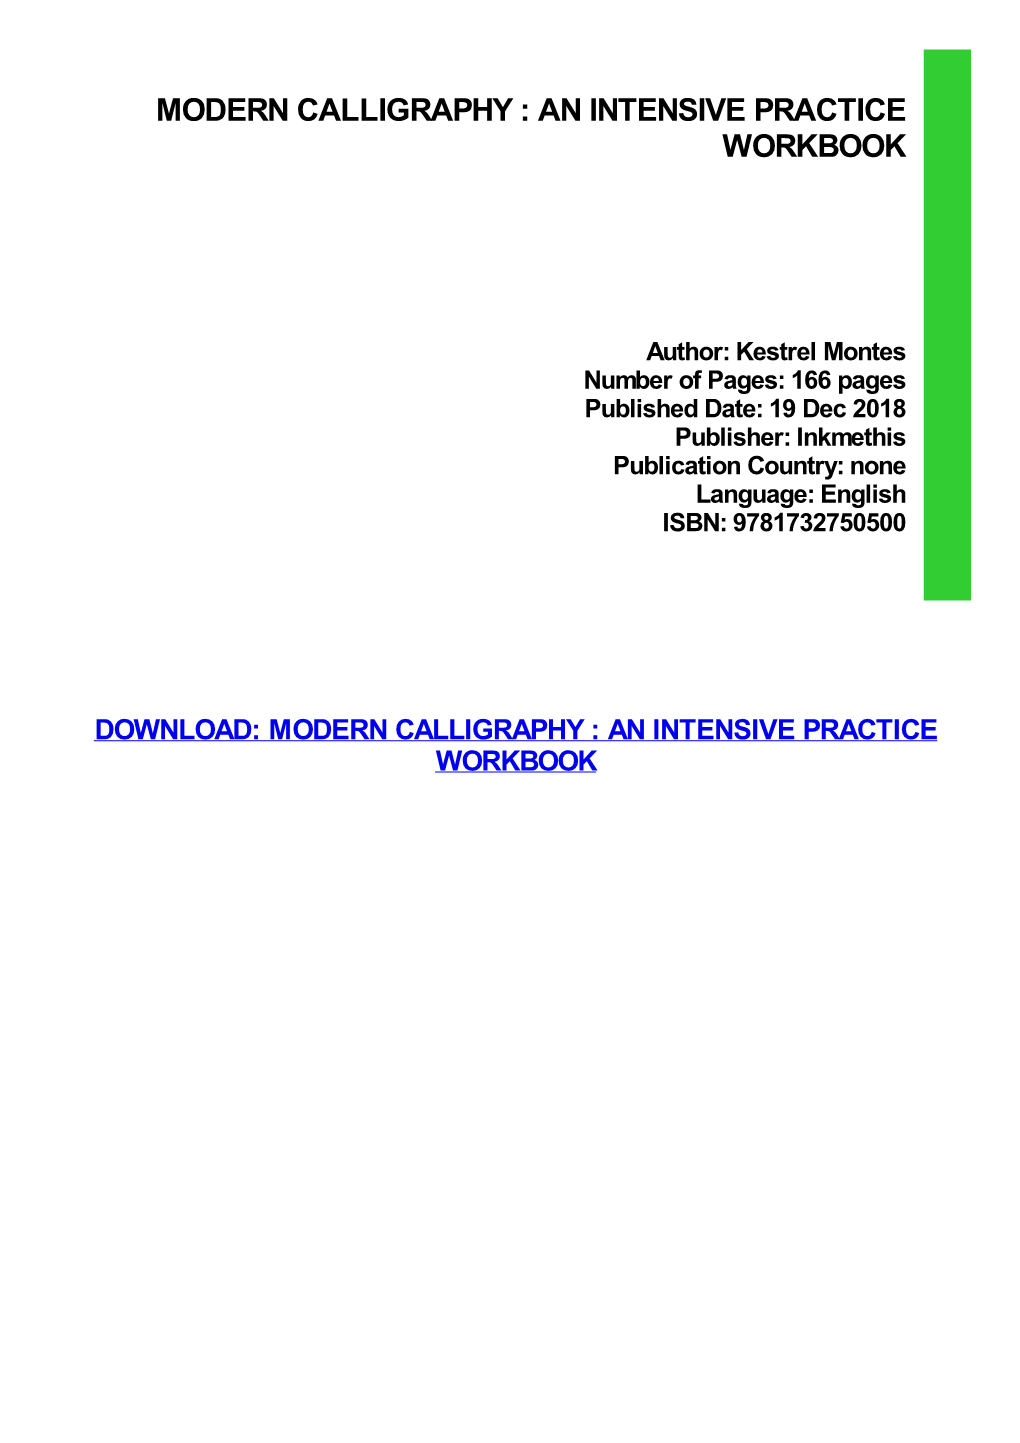 Modern Calligraphy : an Intensive Practice Workbook Pdf Free Download